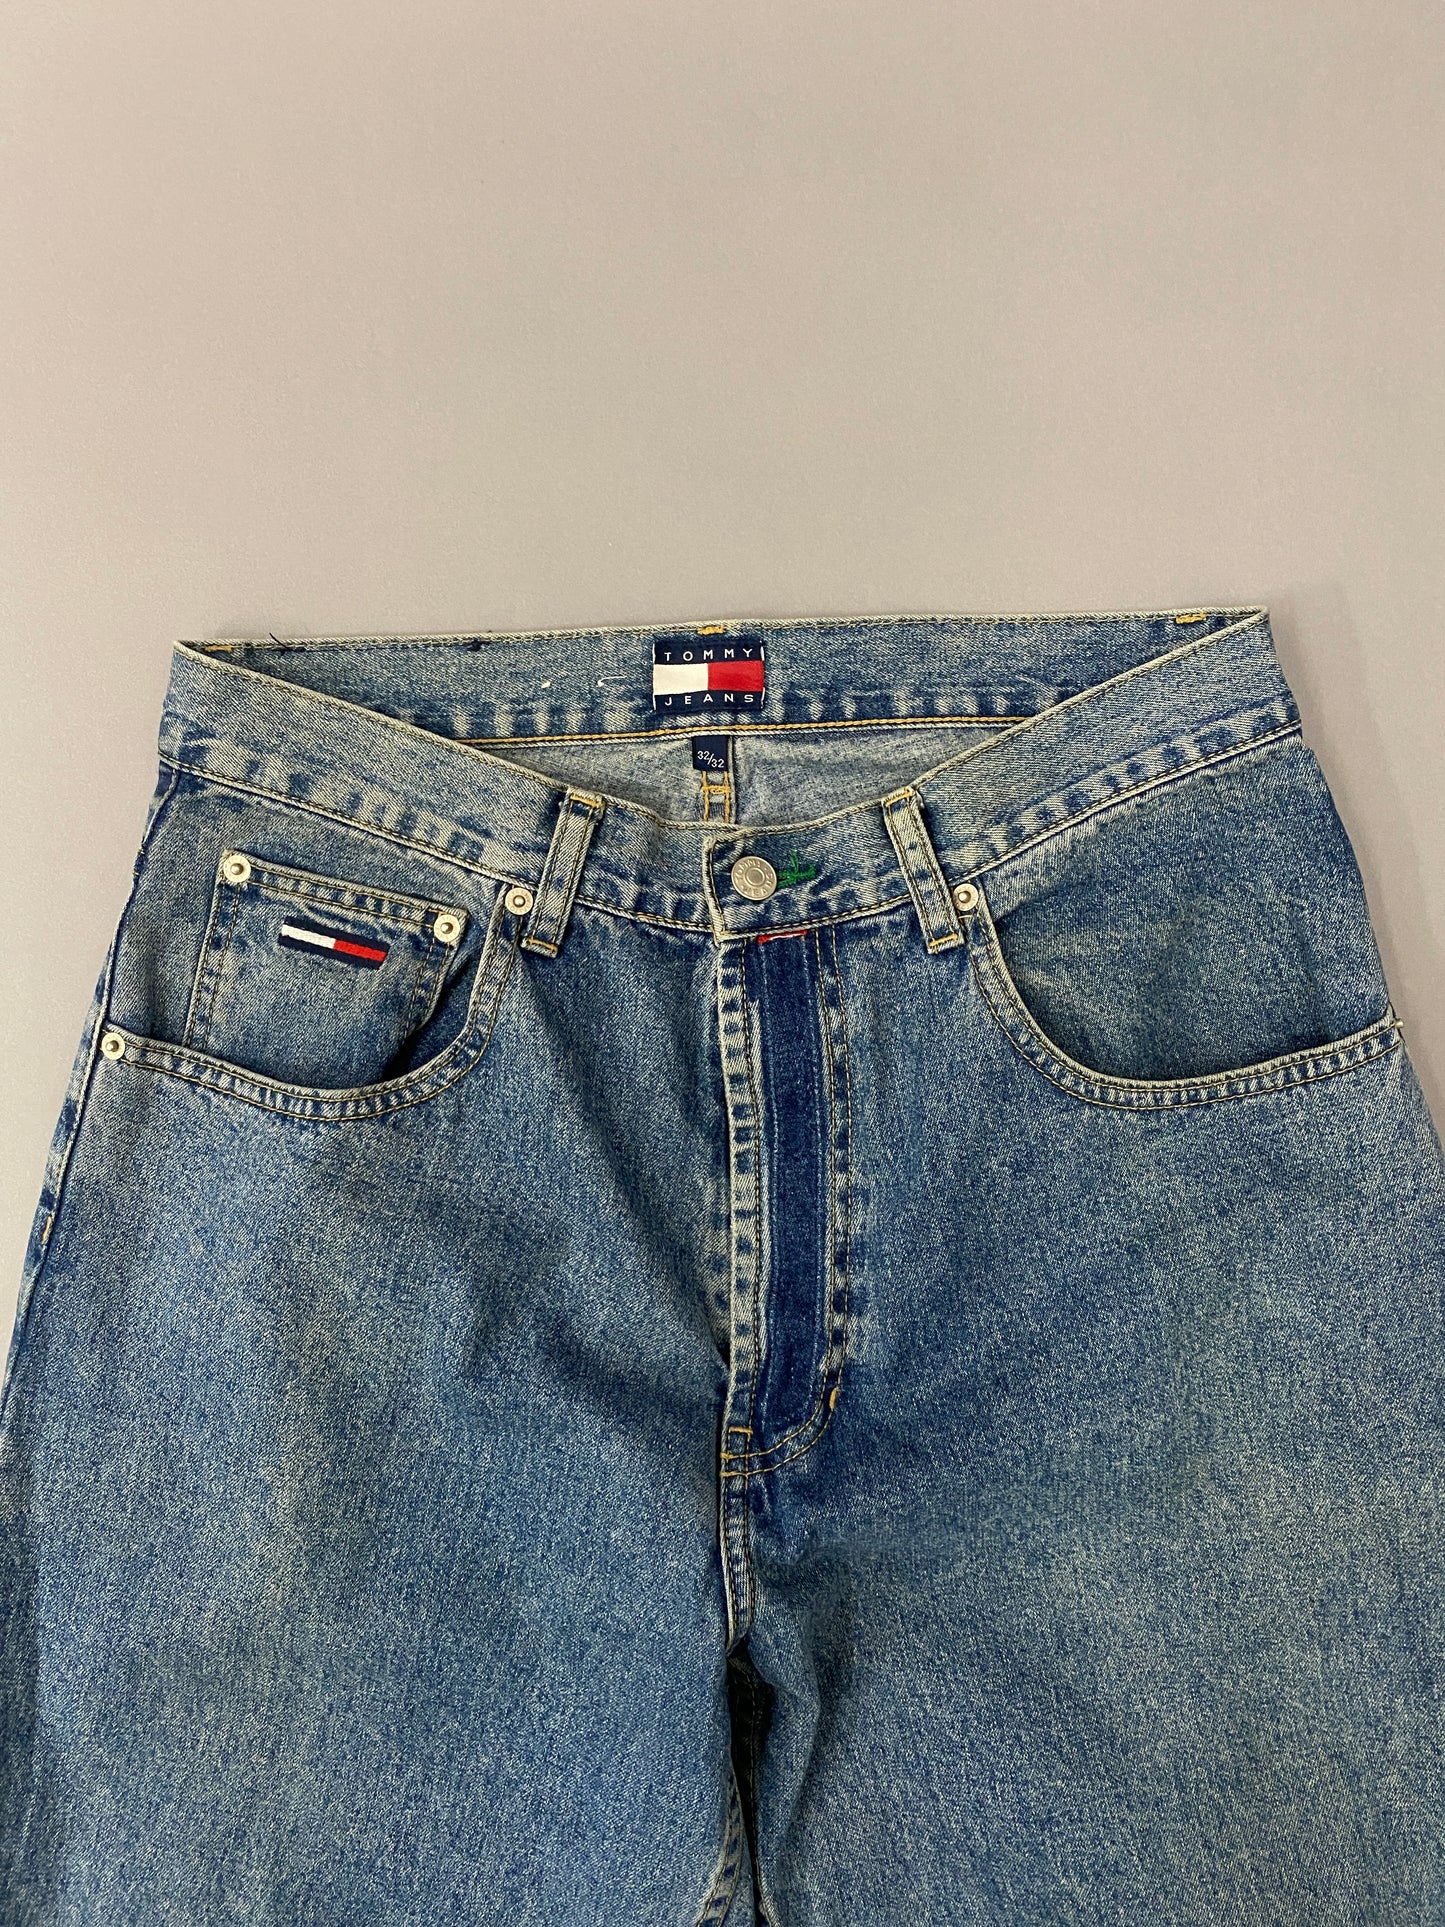 Jeans Tommy Vintage - 32 x 32